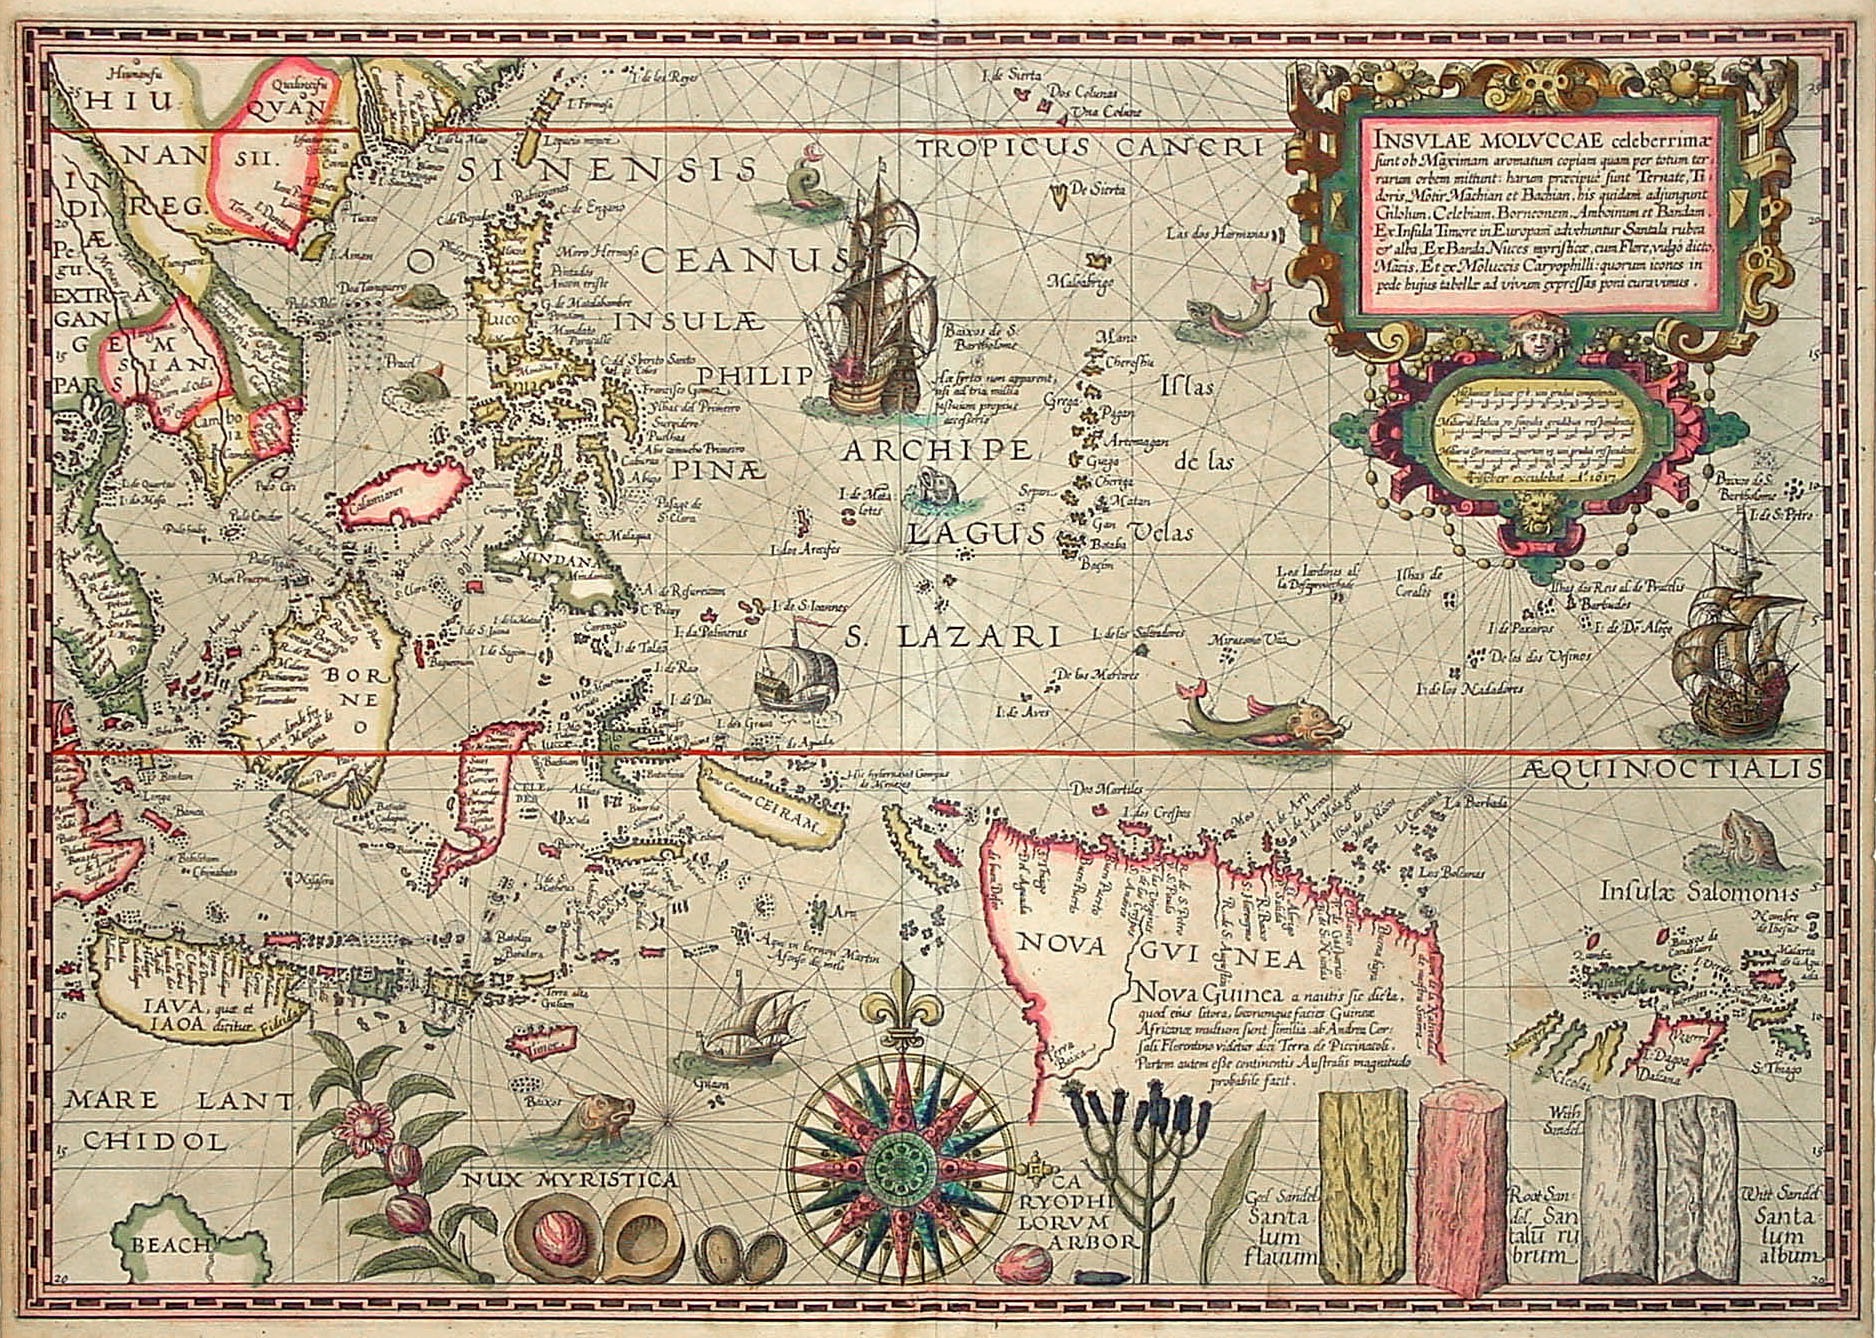 Photo the ca. 1592 map titled Insullae Moluc by Petrus Plancius